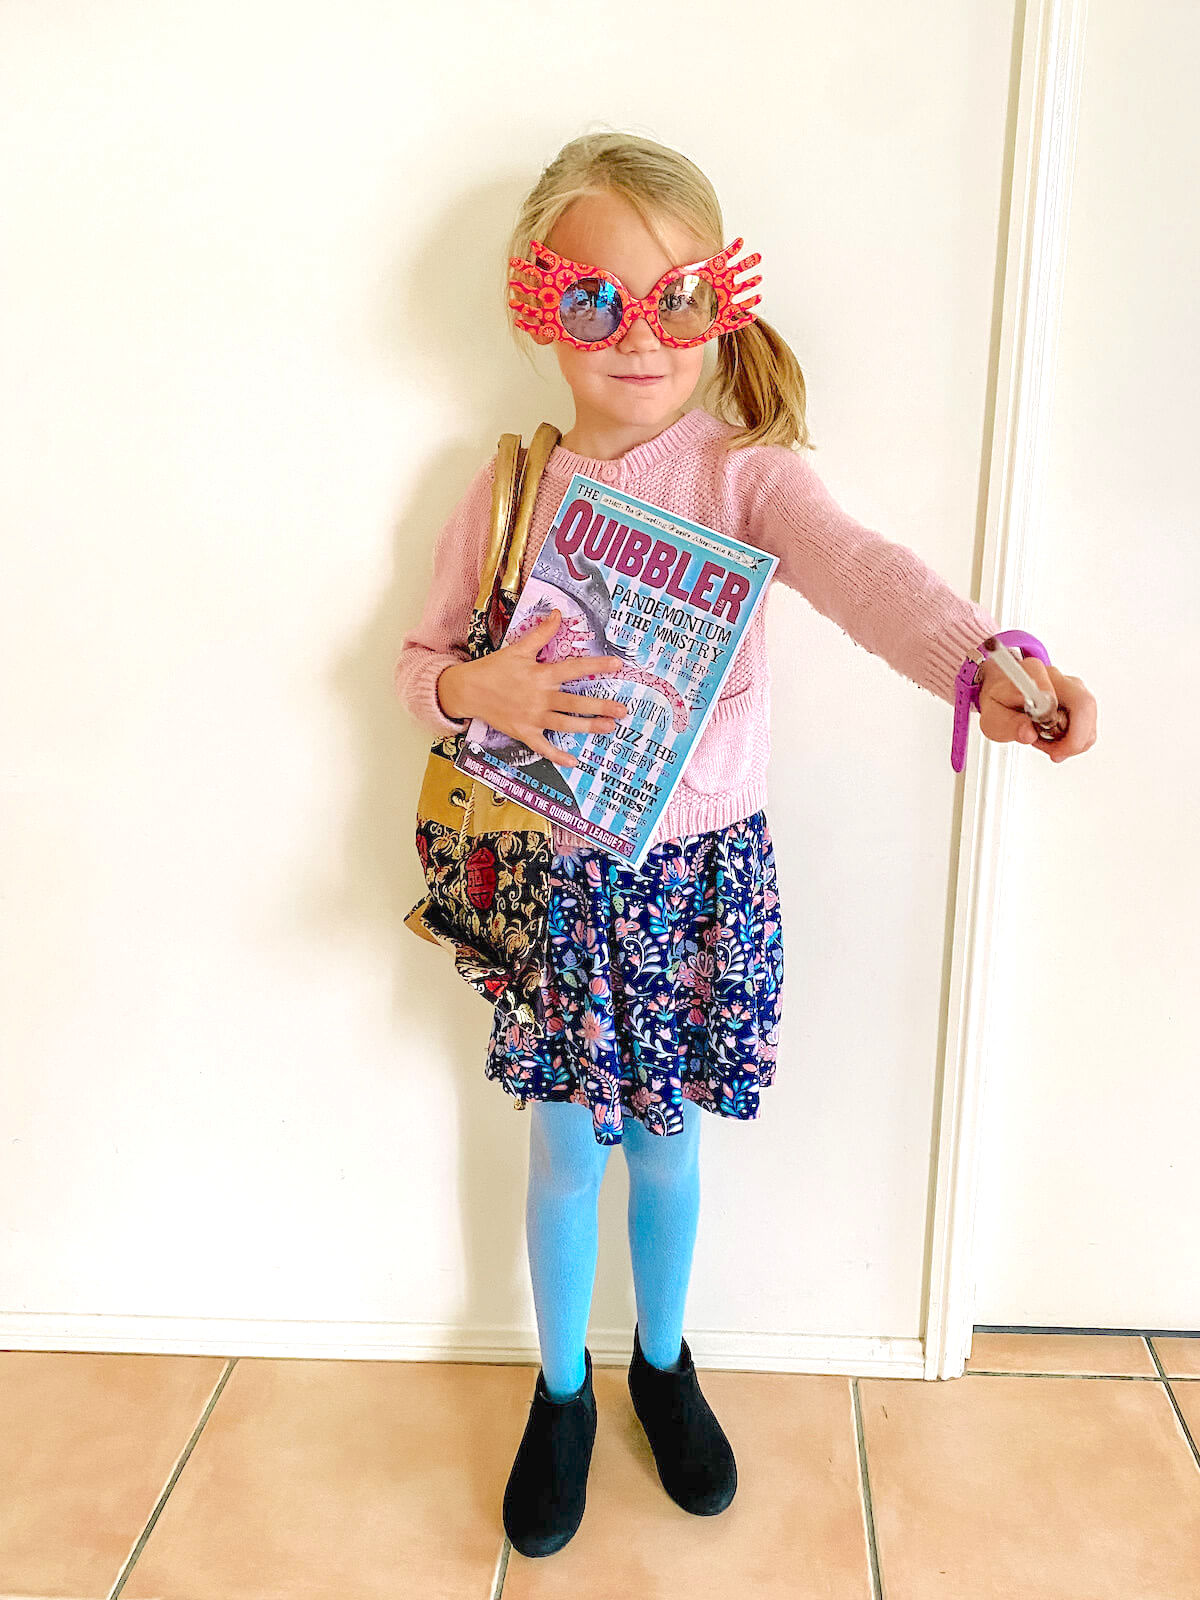 Little girl dressed as luna lovegood for book week